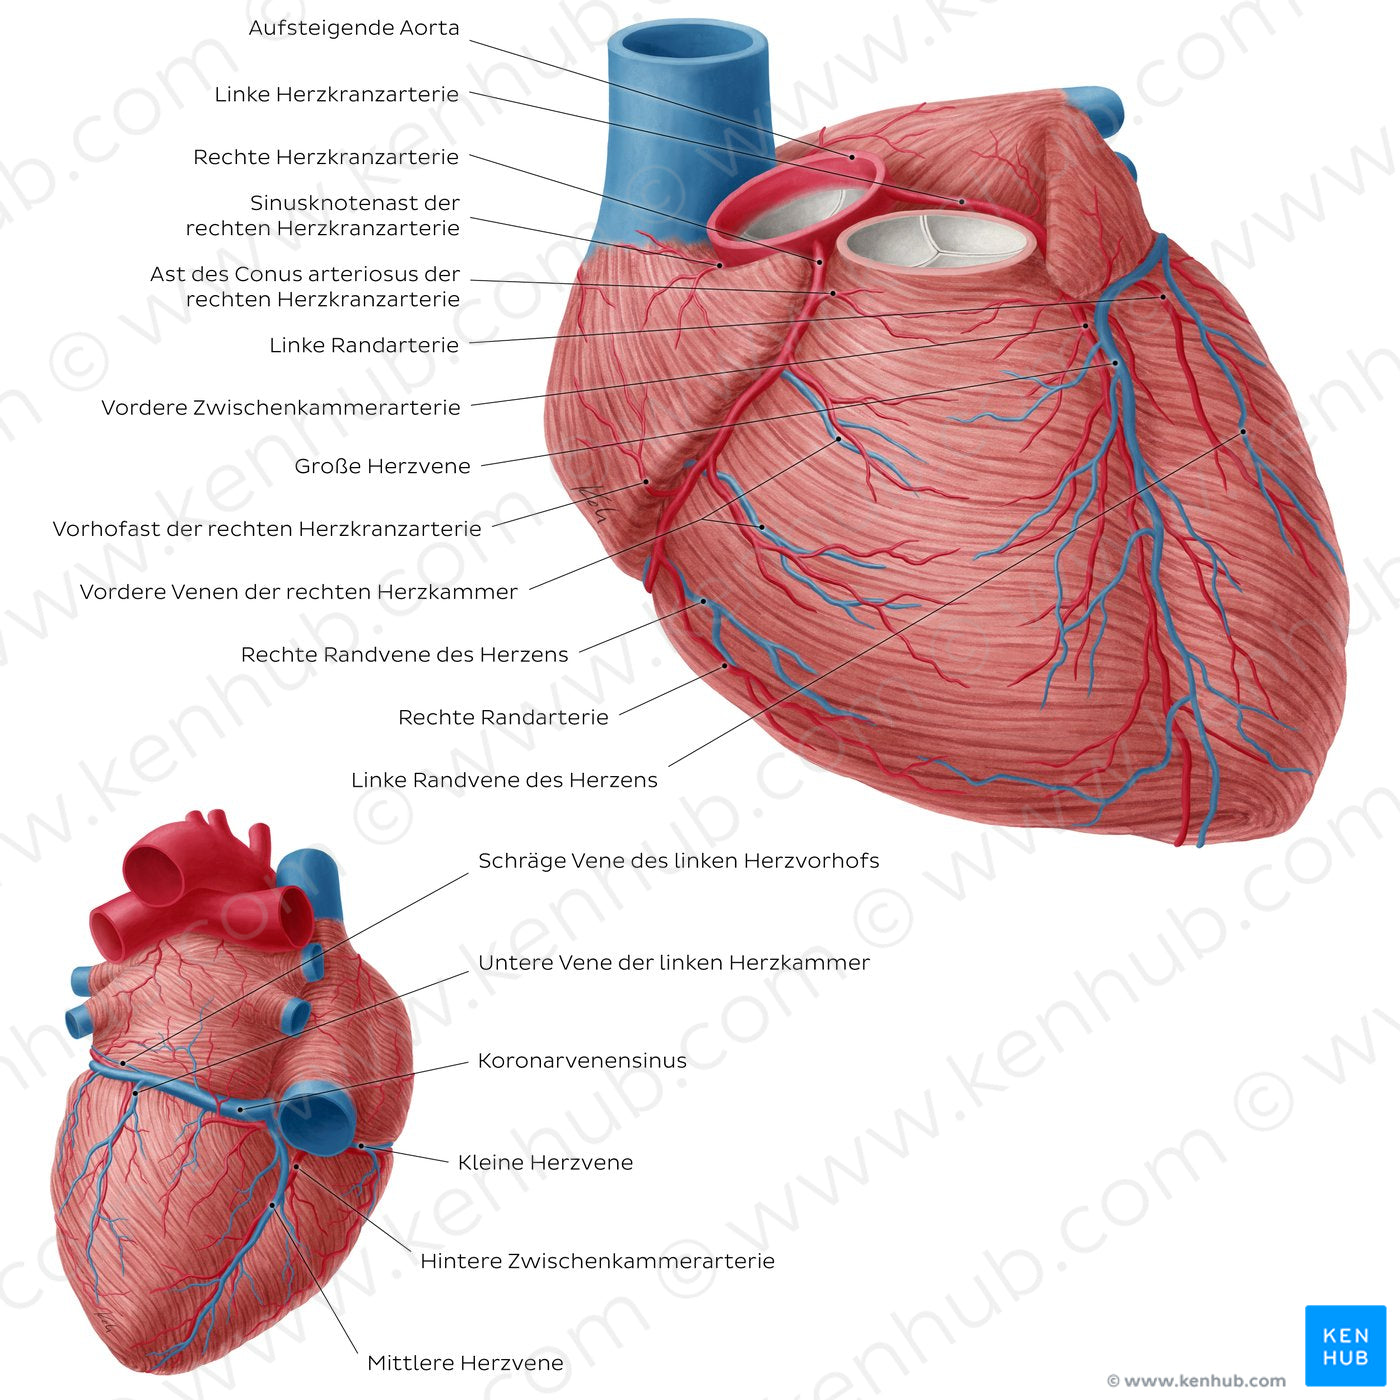 Coronary arteries and cardiac veins (German)